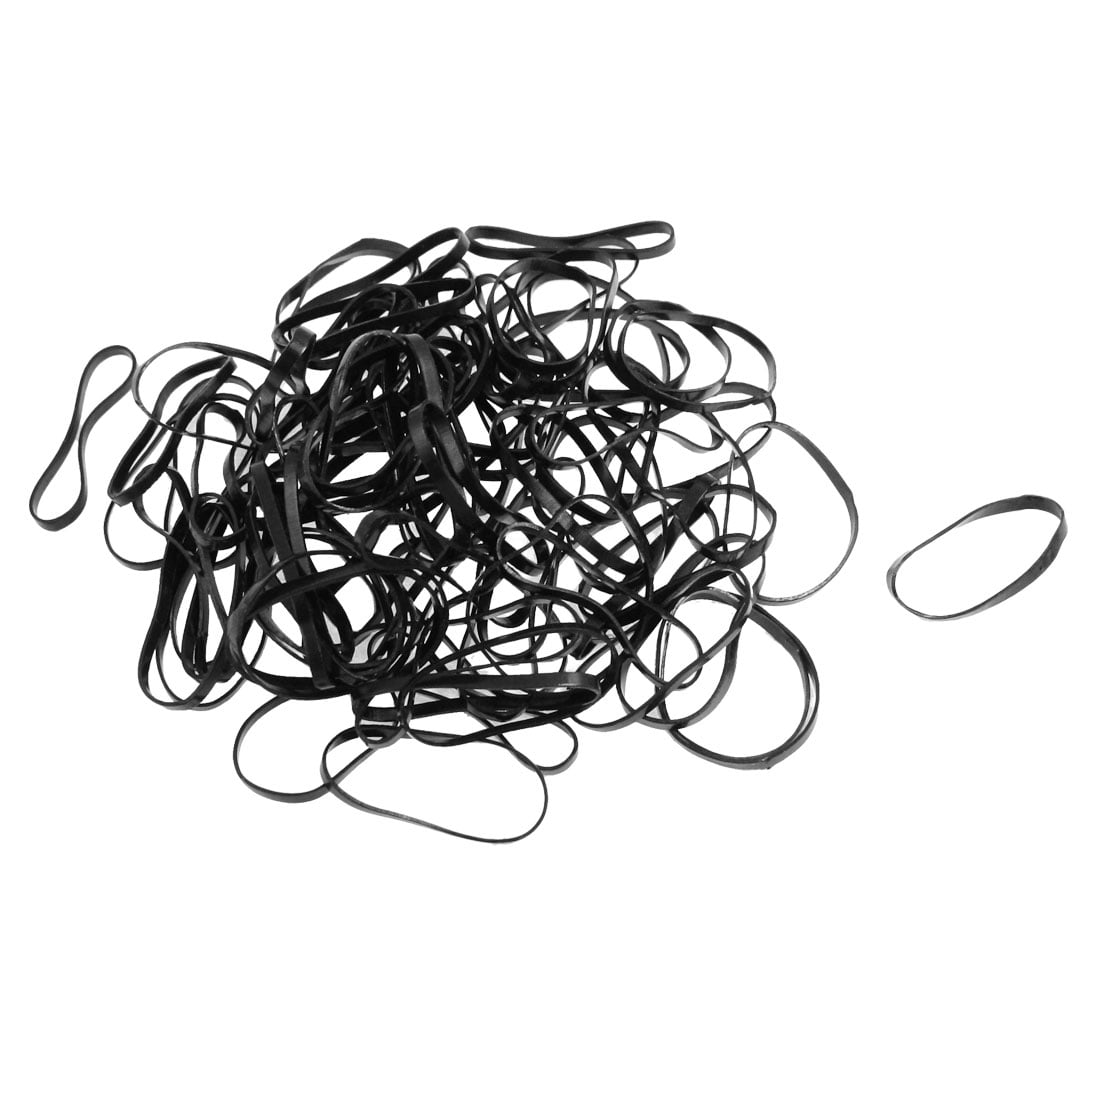 90pcs rubber hairband rope ponytail holder elastic hair band